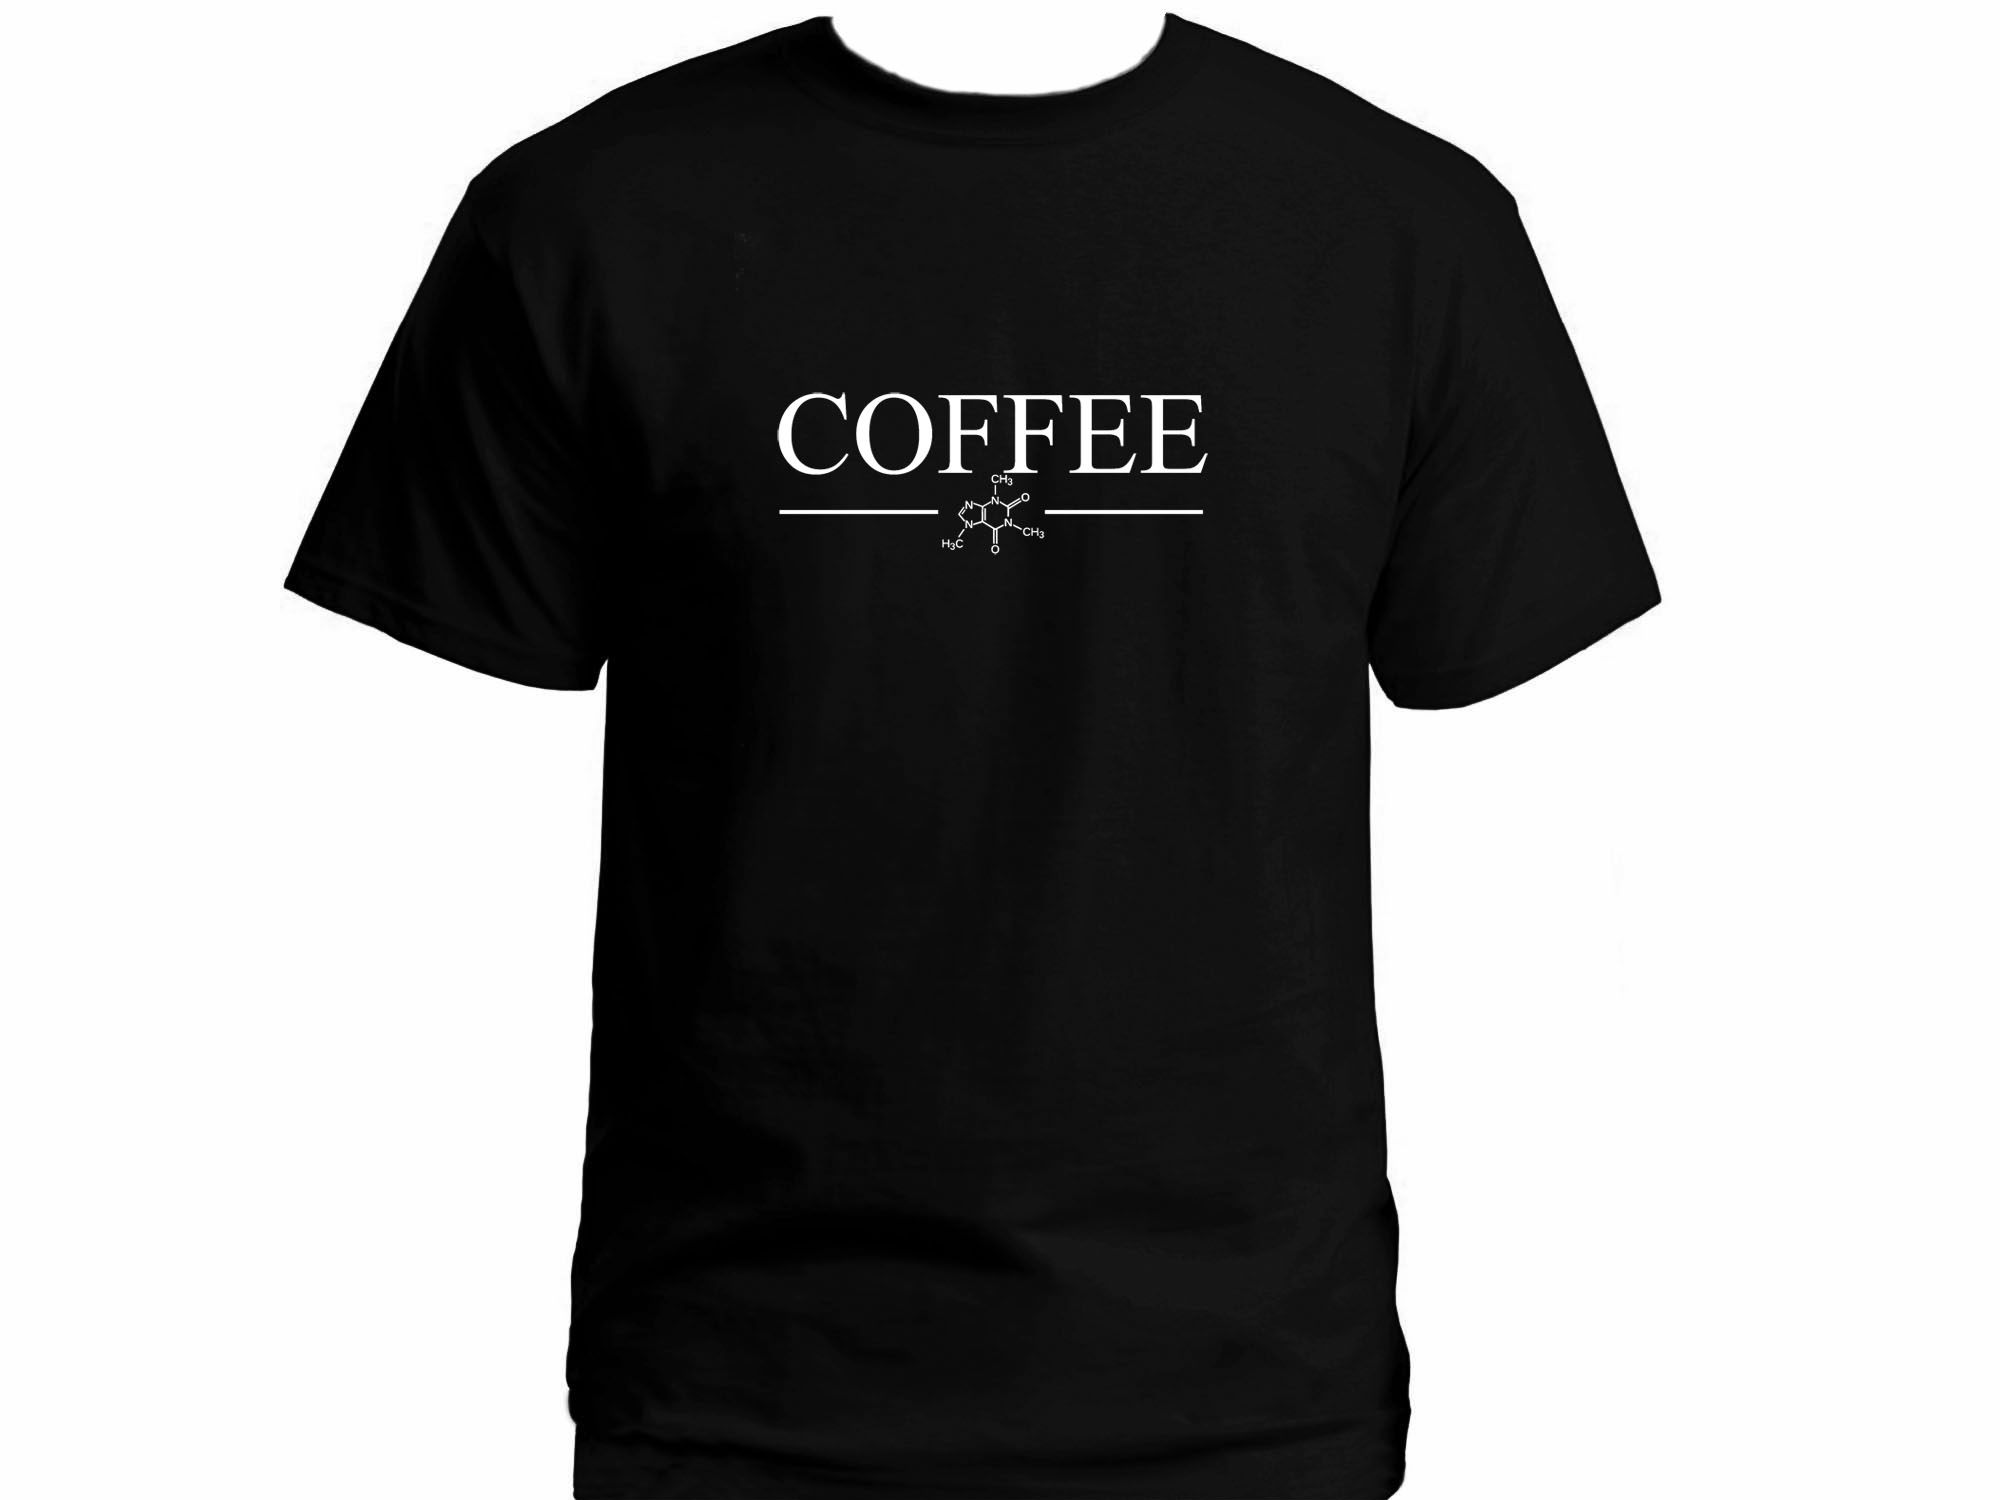 Geek shirts - My Cool T-Shirt